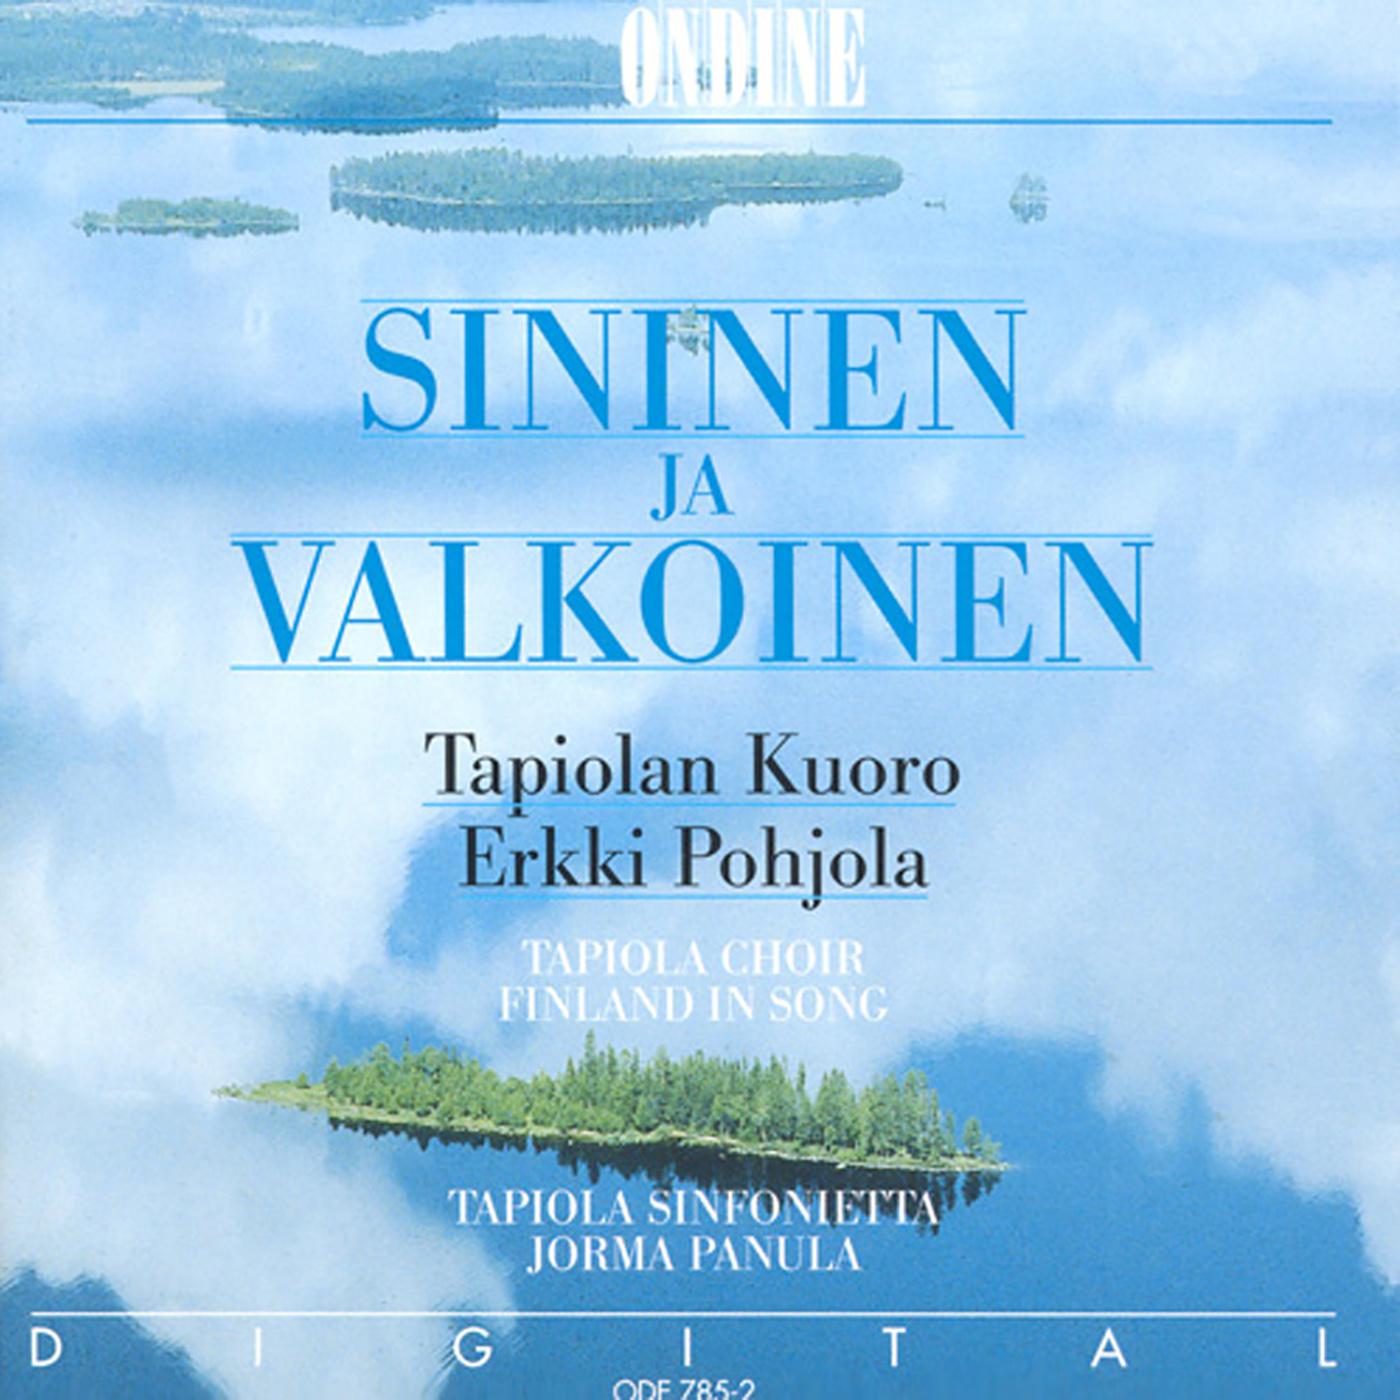 Tapiola Choir - Suomalainen rukous (Finnish Prayer)